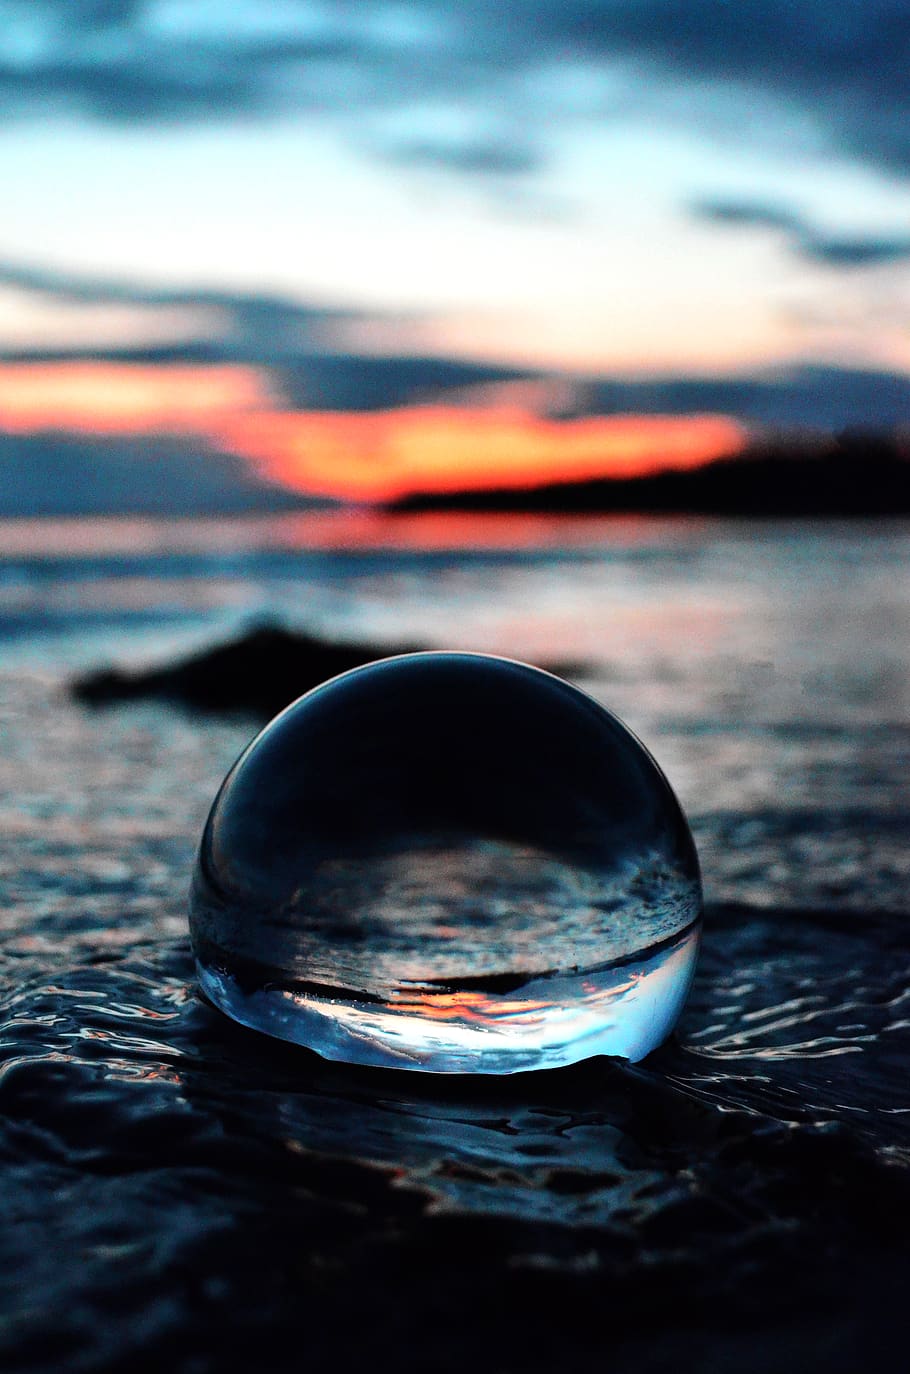 Clear Glass Ball on Shore in Tilt Shift Lens Photo, blurred background